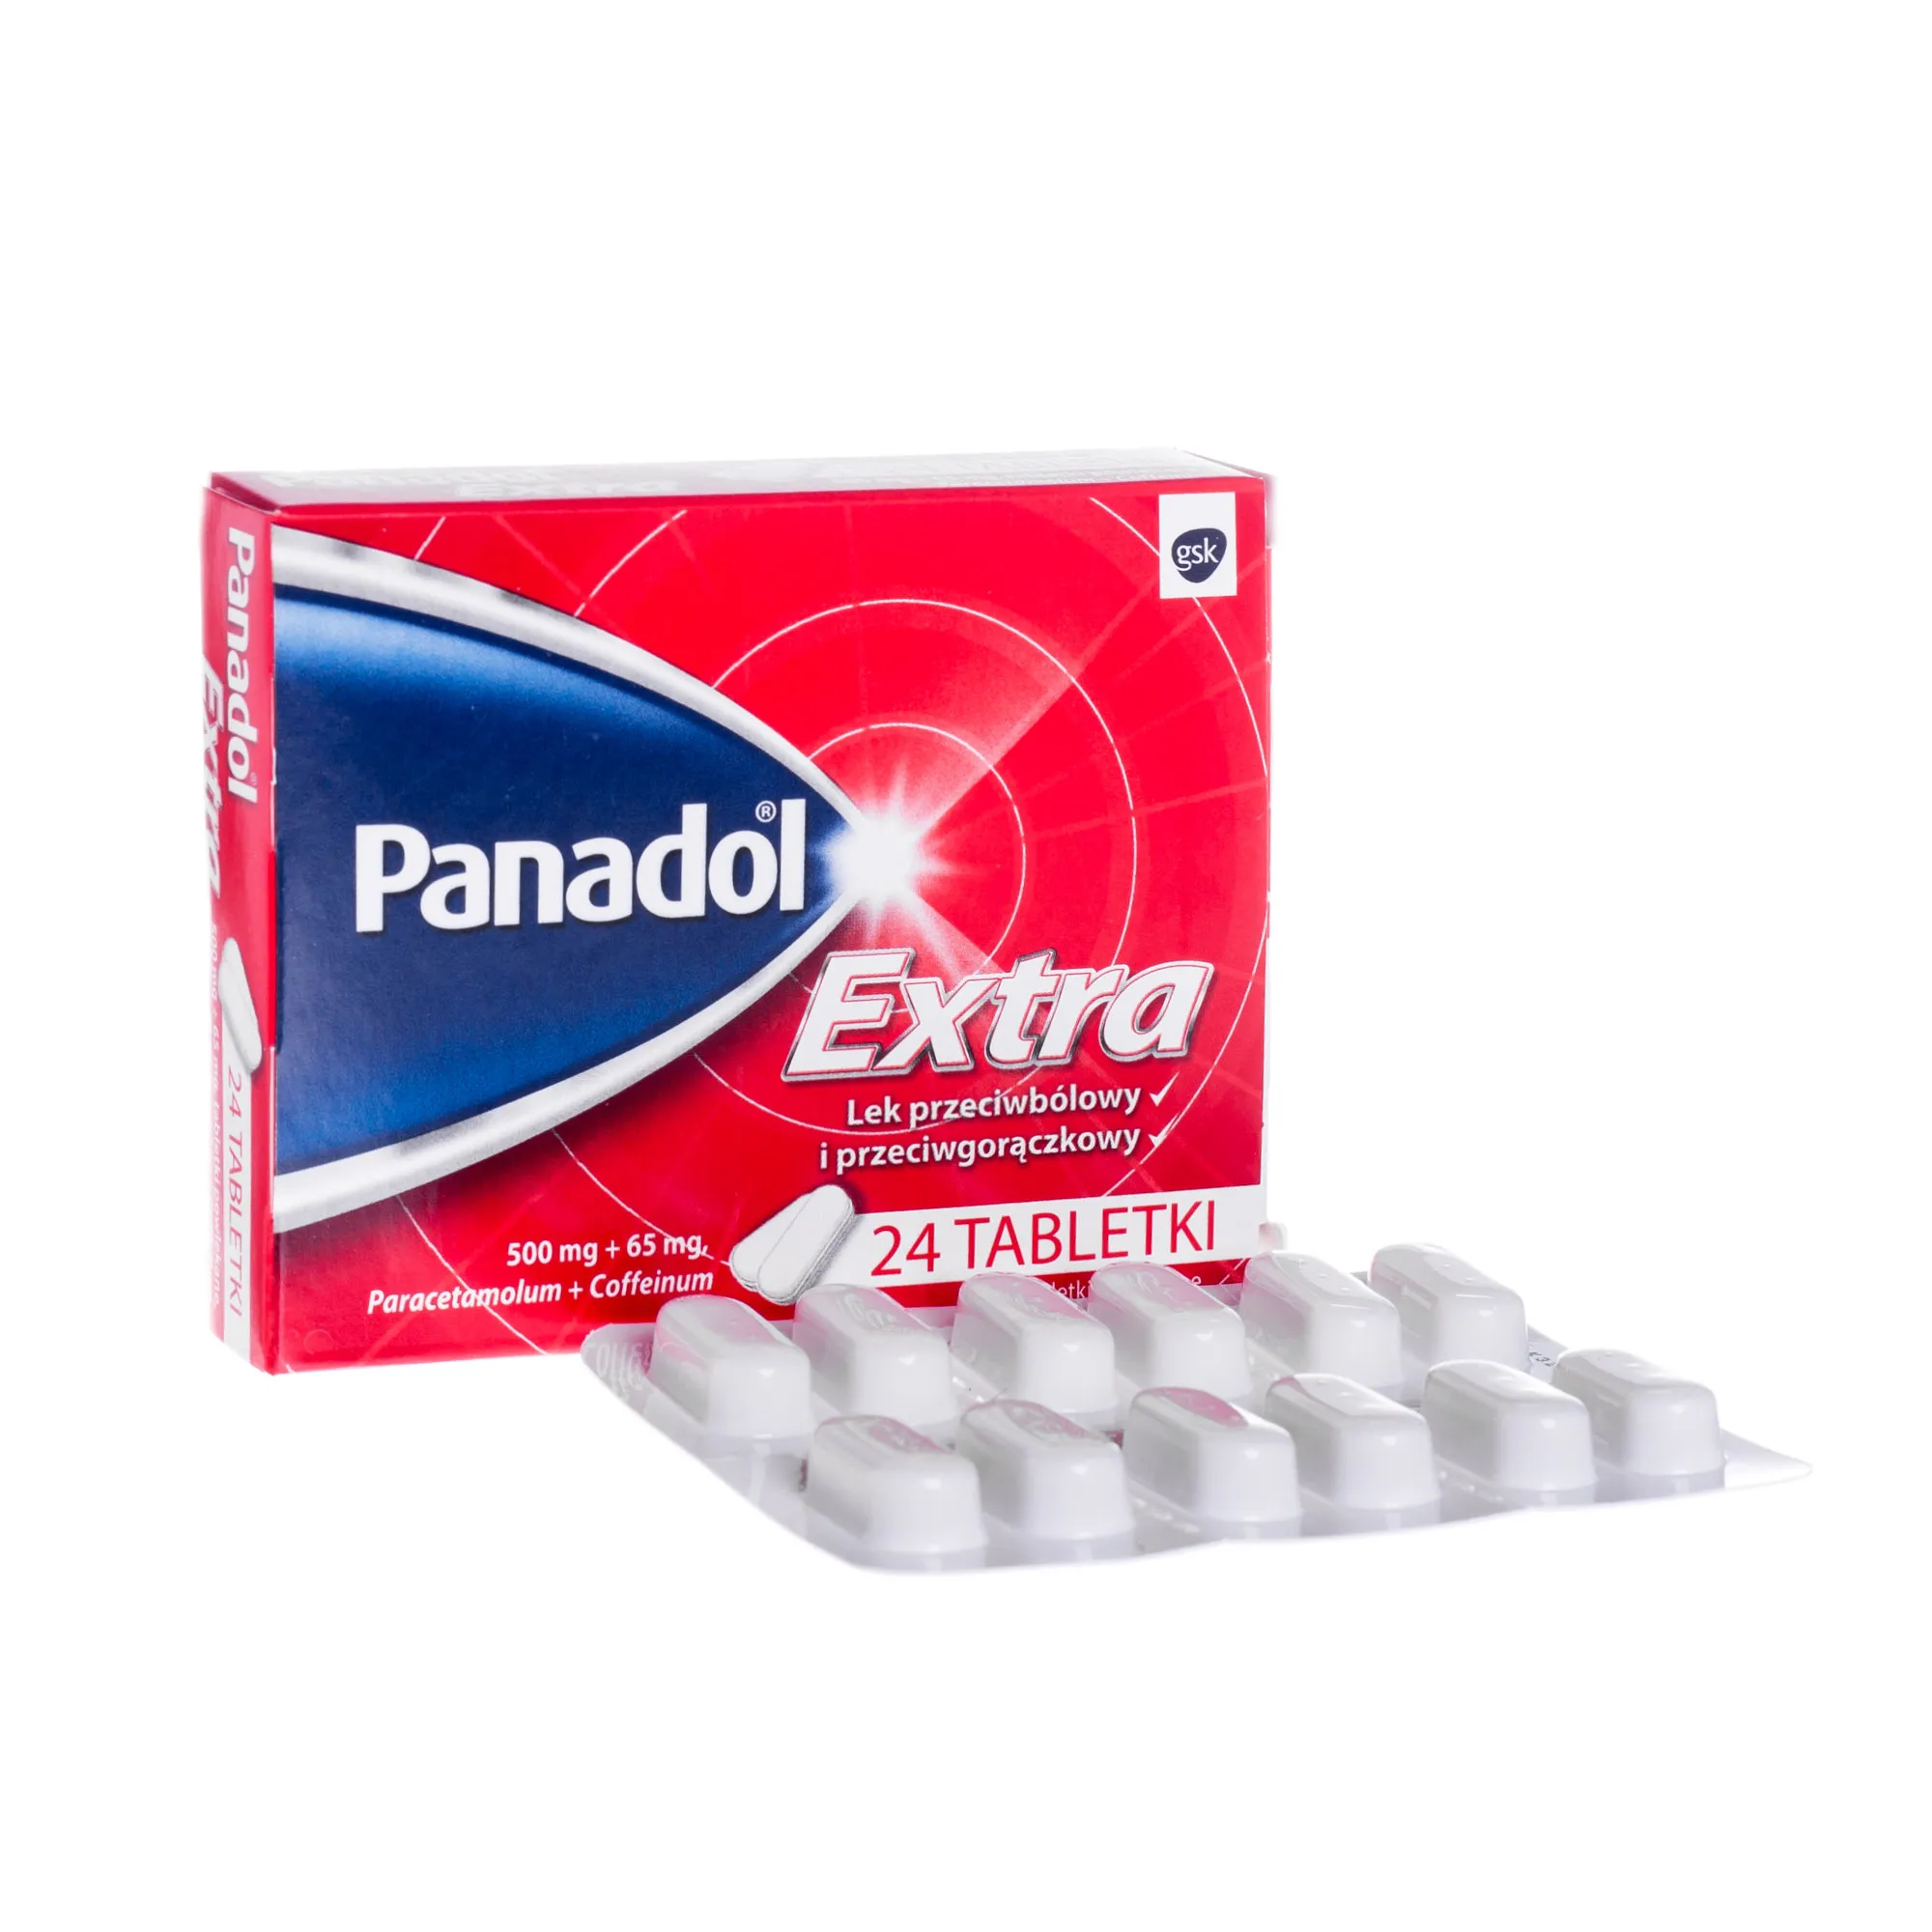 Panadol Extra, 500 mg + 65 mg, 24 tabletki